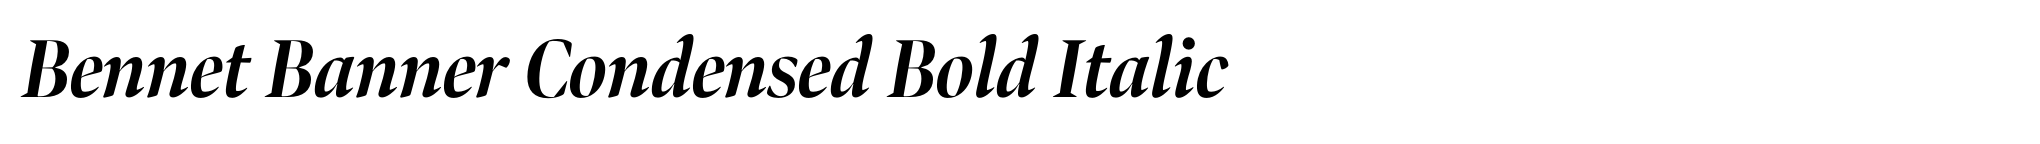 Bennet Banner Condensed Bold Italic image